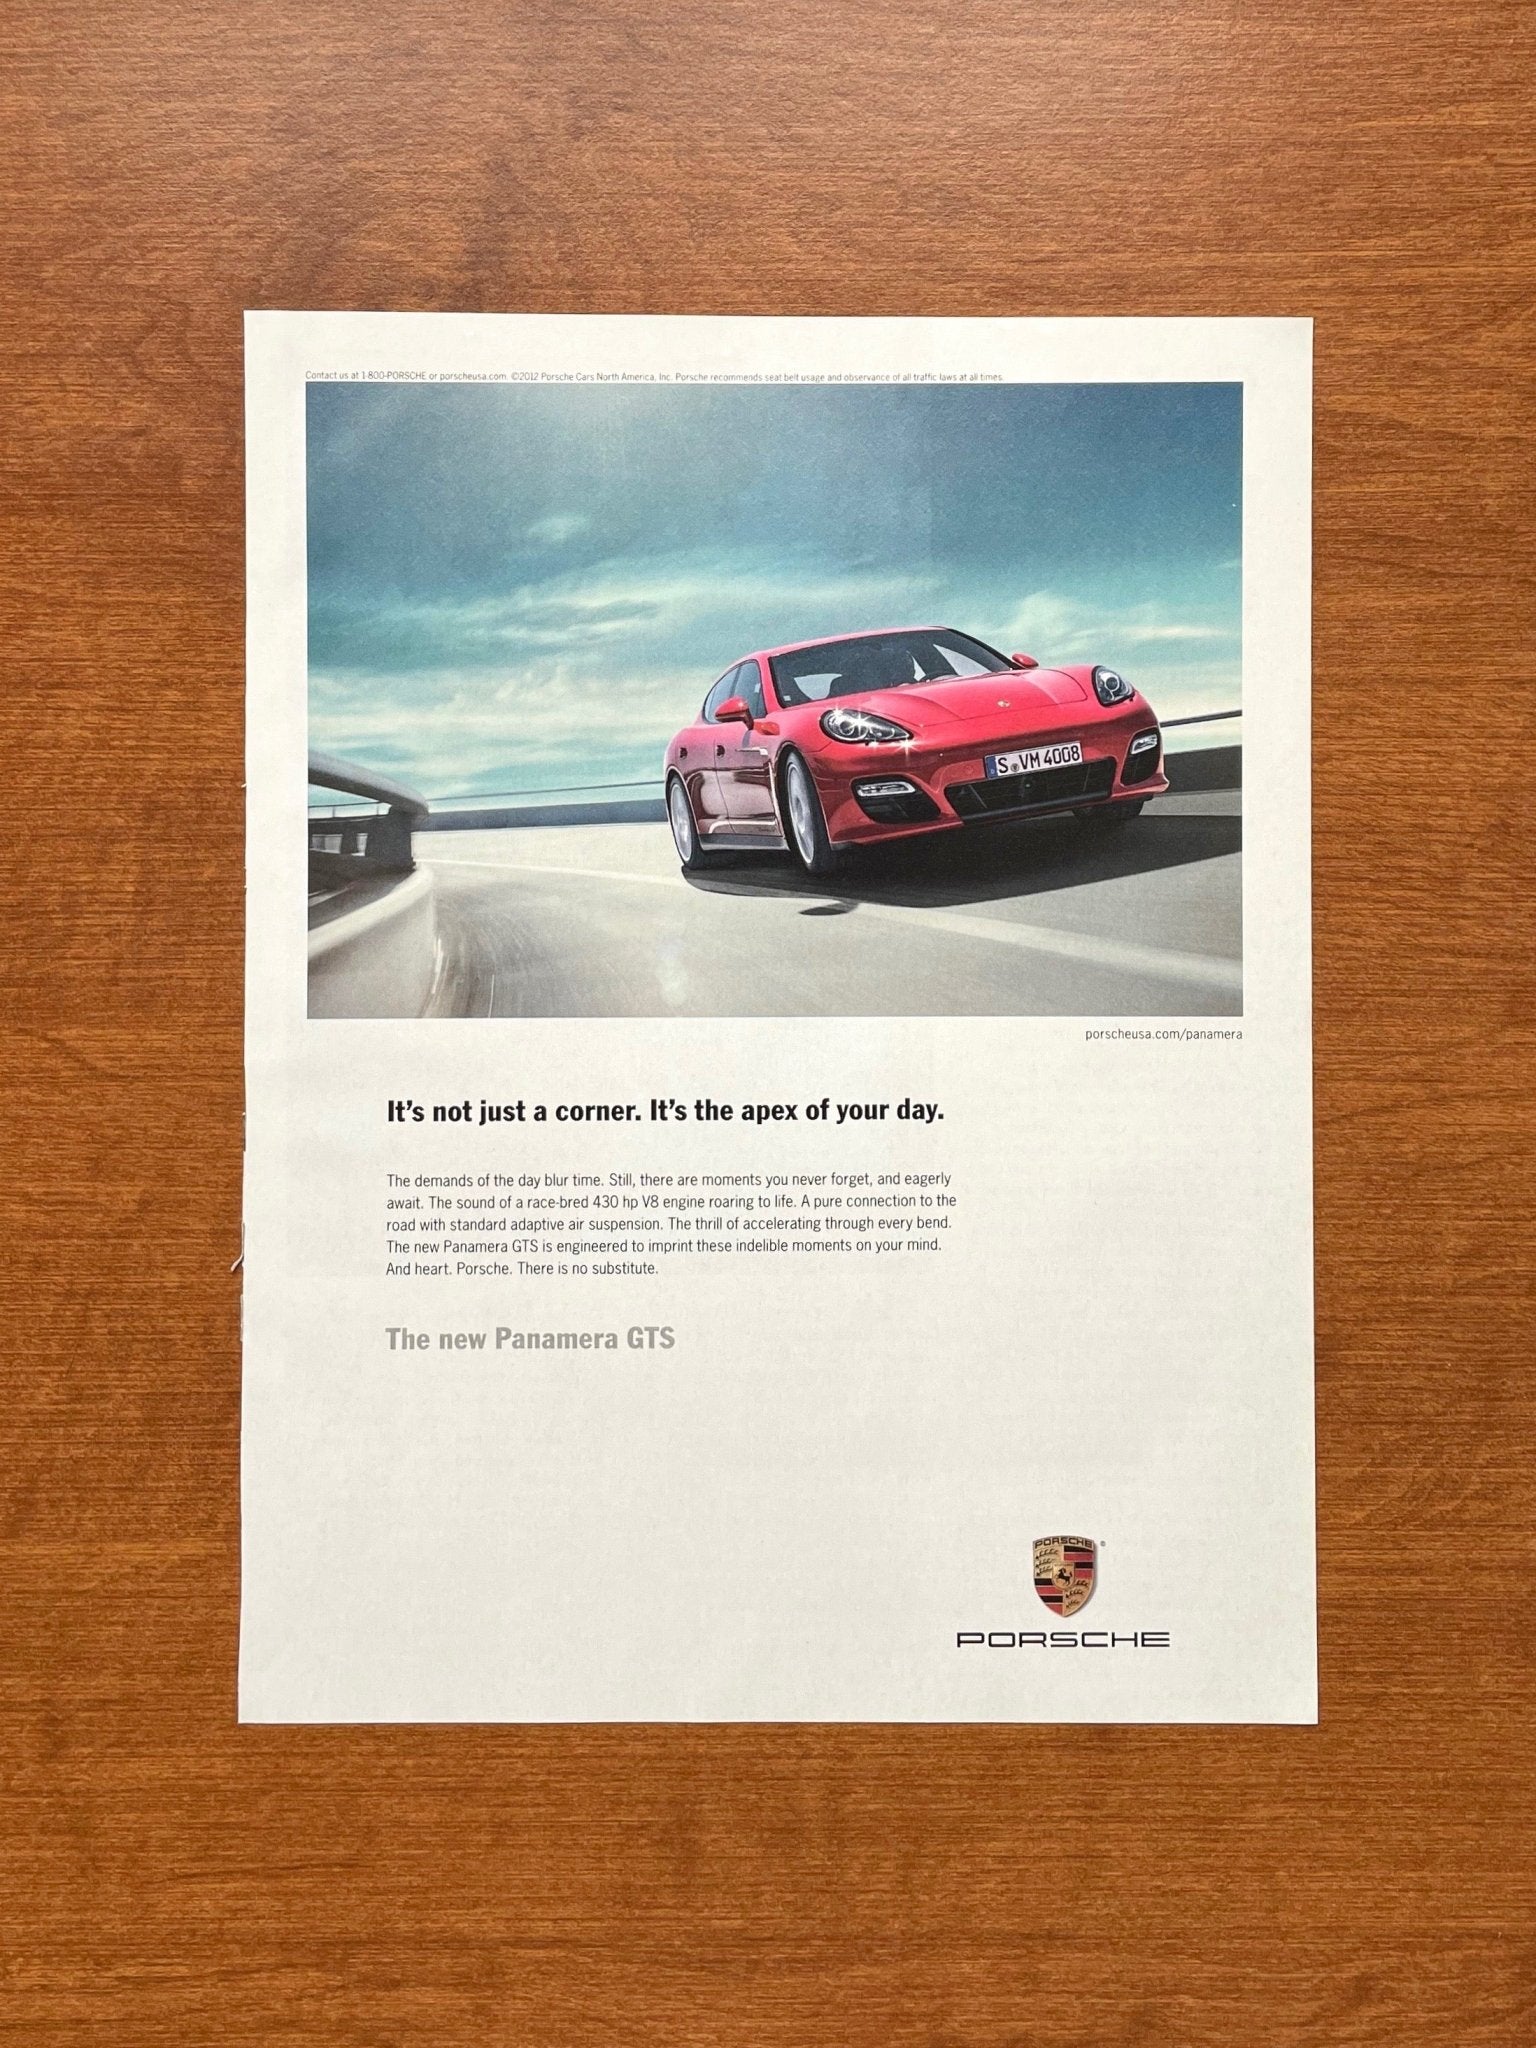 2012 Porsche Panamera GTS "It's not just a corner..." Advertisement